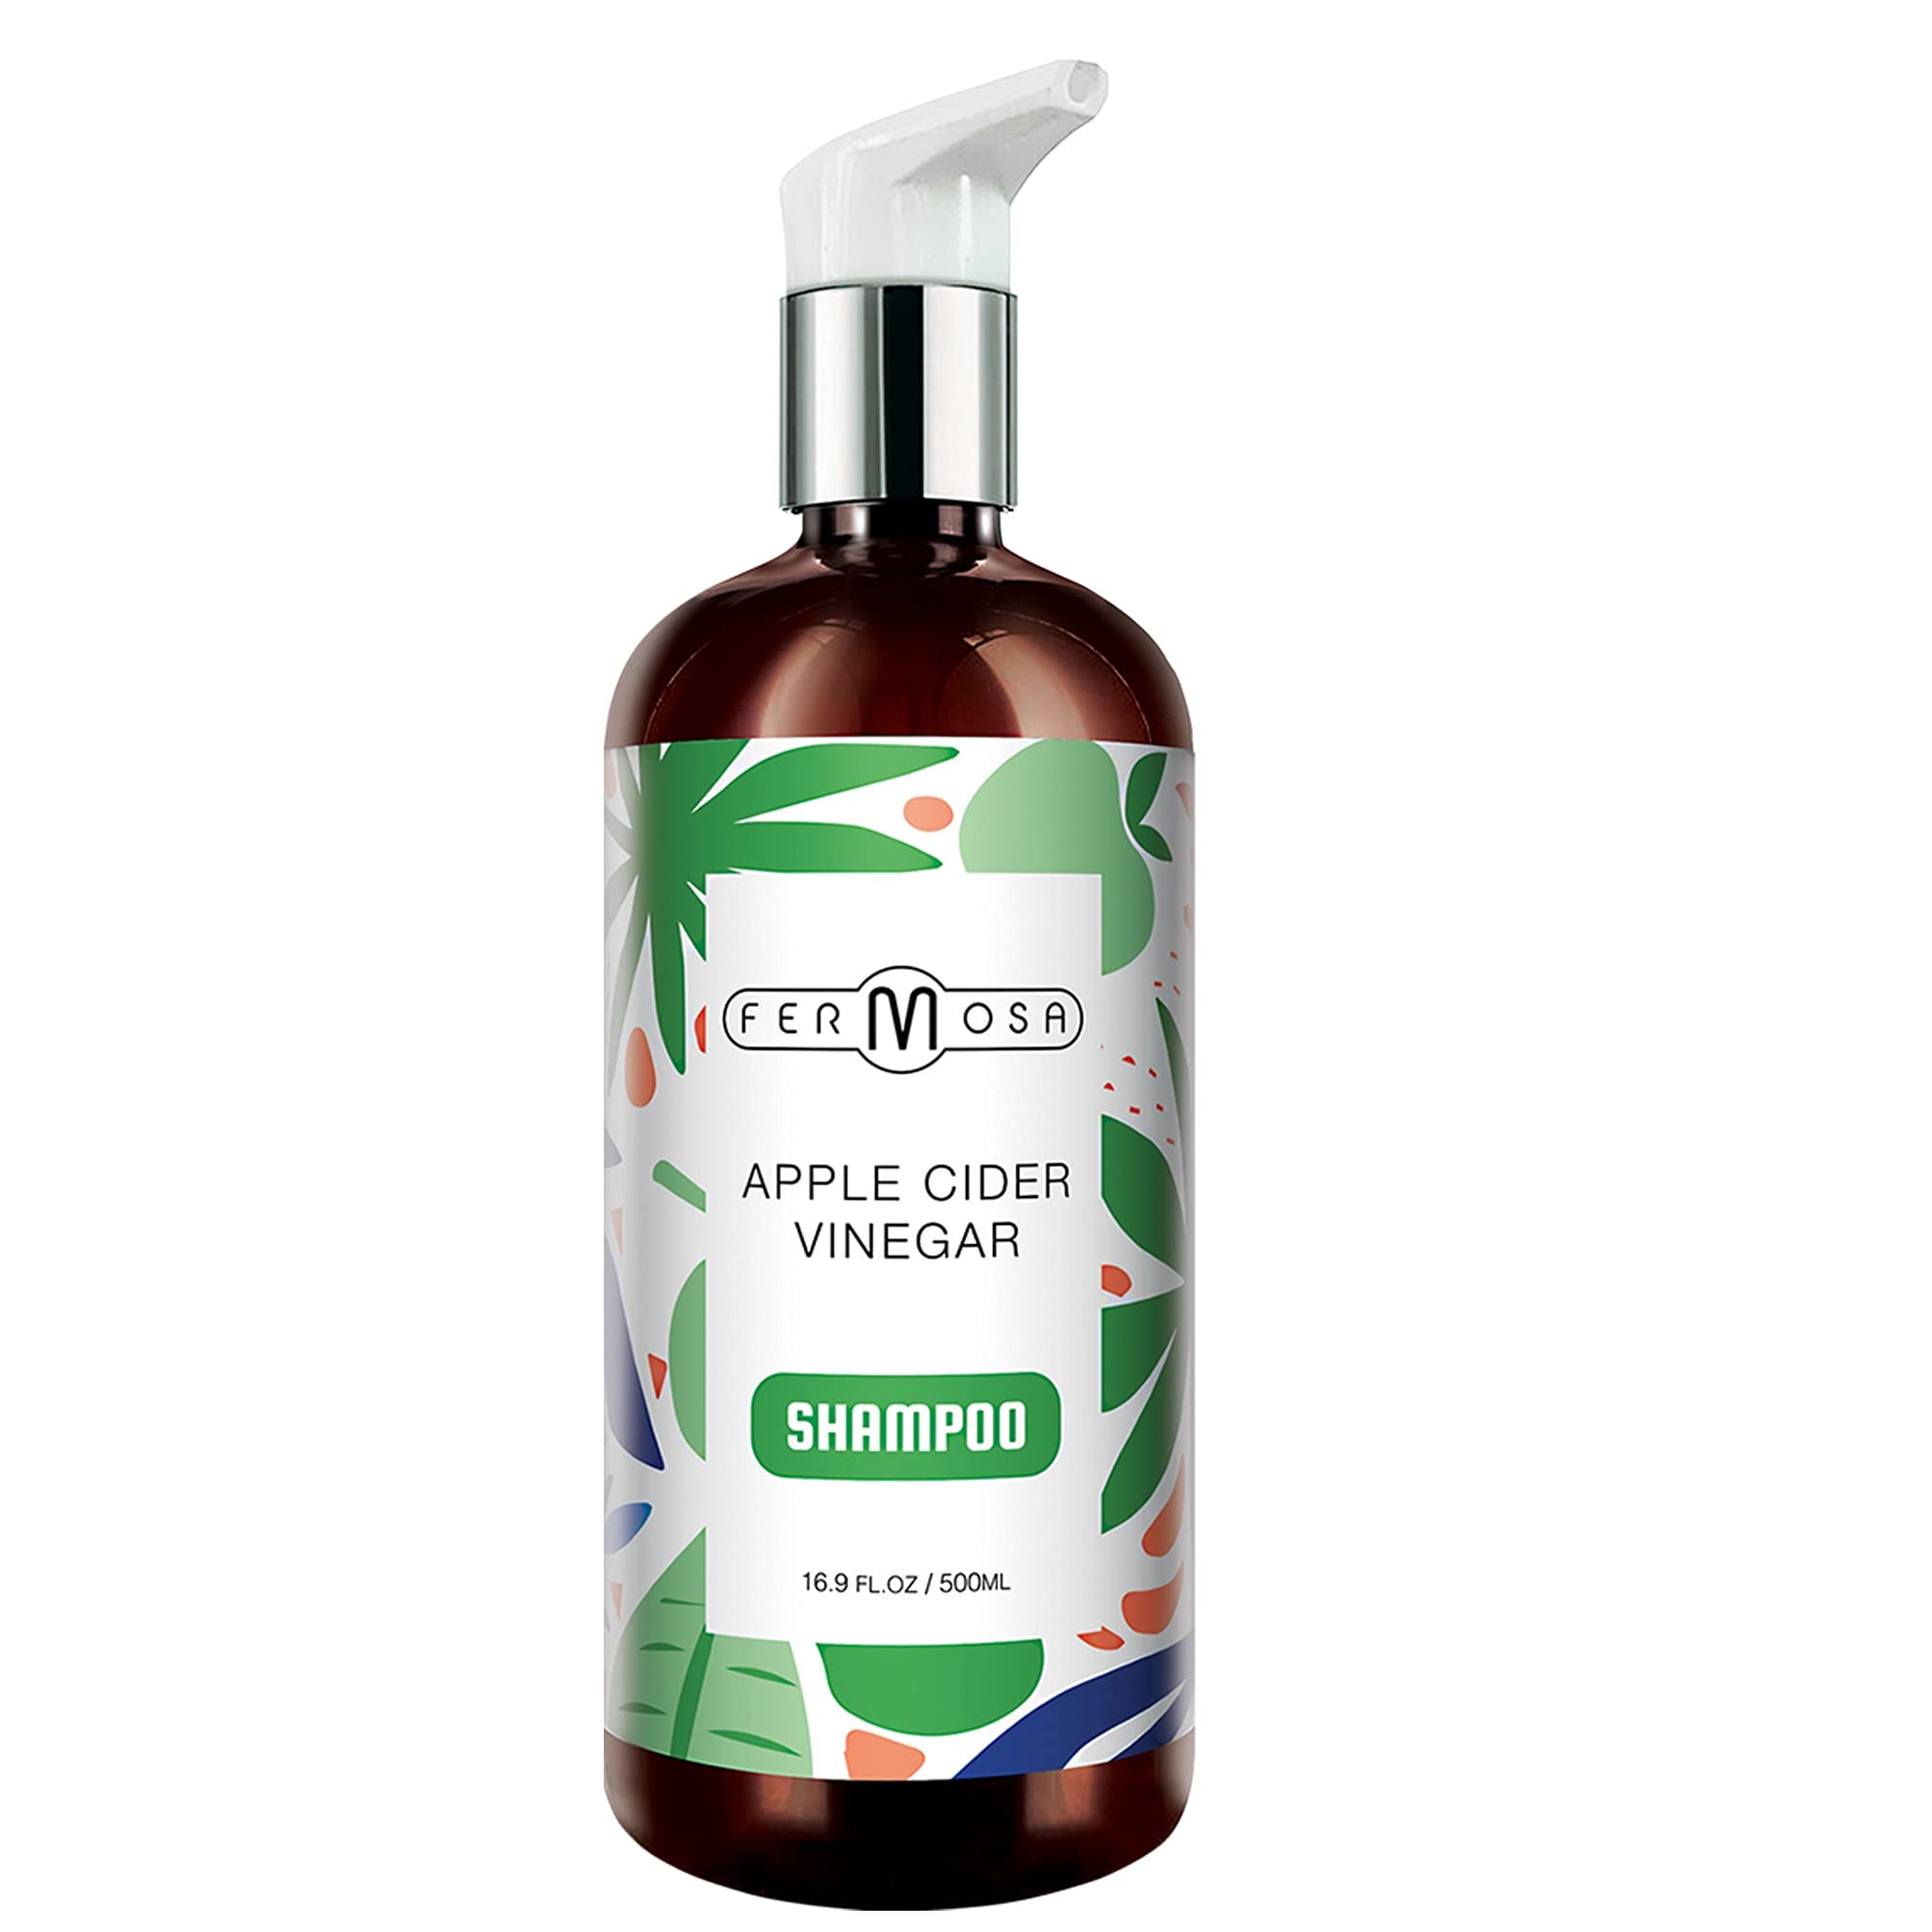 FERMOSA Shampoo - Clarifying & Nourishing, Hydrating and Cleansing, Reduces Itchy Scalp & Frizz, Anti Dandruff, Sulfate Free 16.9oz…